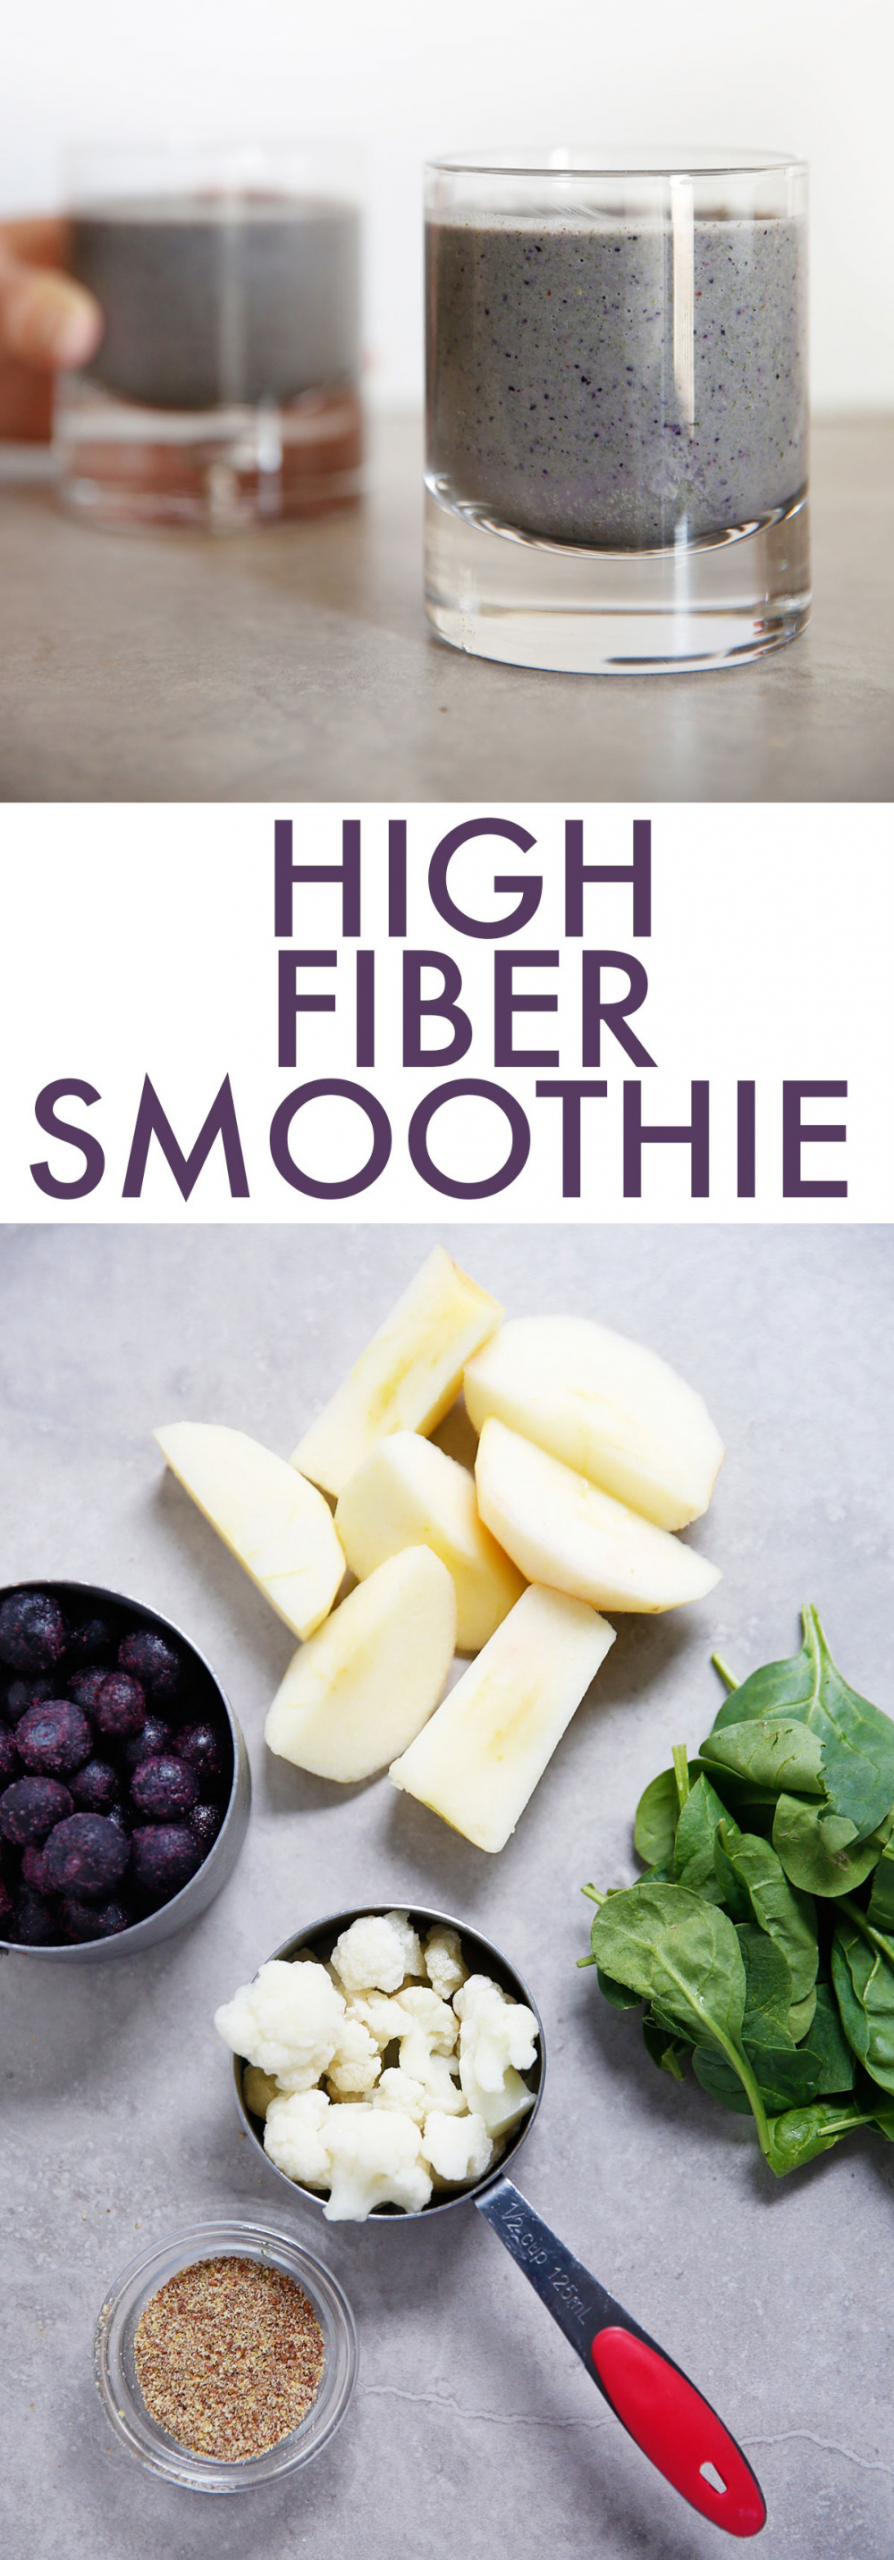 High Fiber Smoothies Recipes
 High Fiber Smoothie Freezer Pack Vegan Lexi s Clean